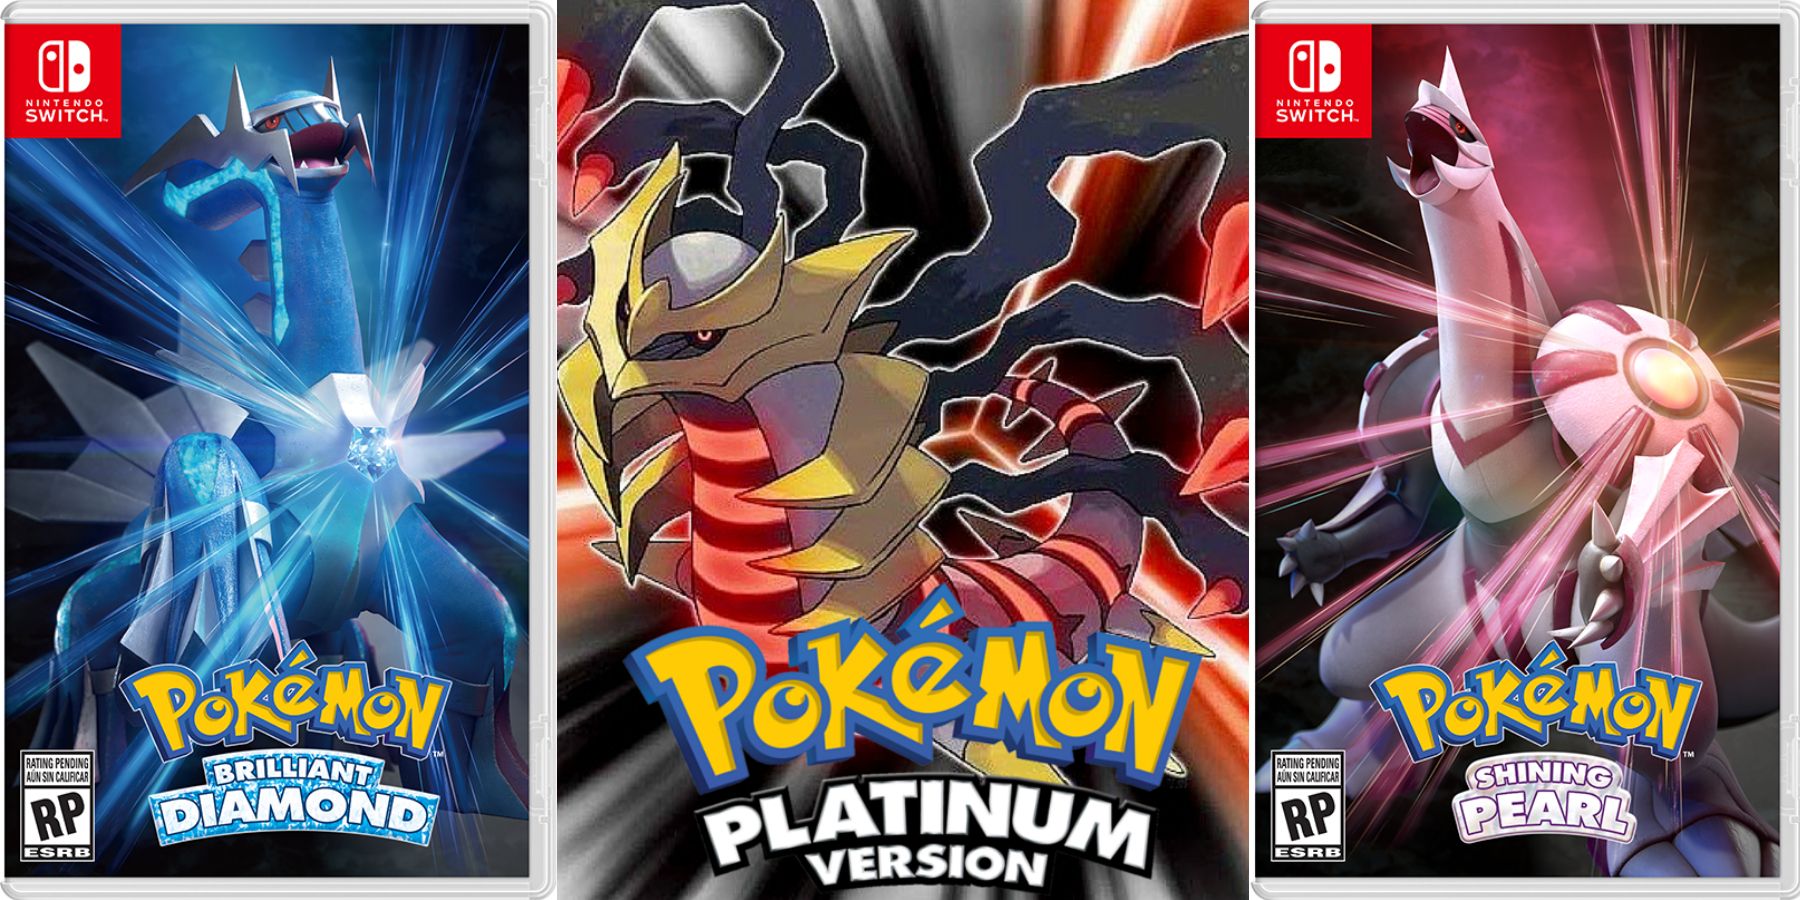 Pokémon Brilliant Diamond and Shining Pearl review – no platinum?